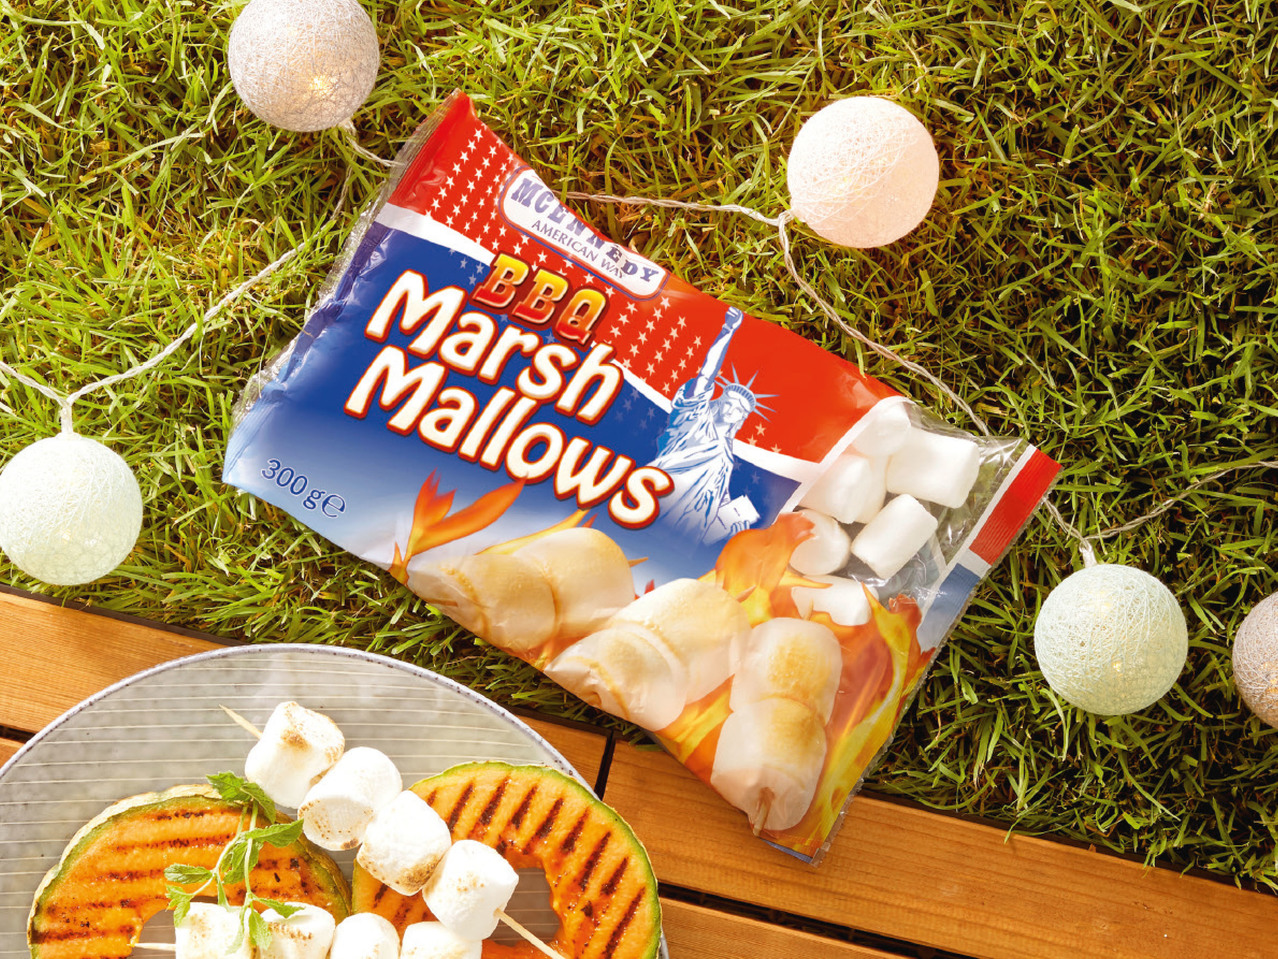 MCENNEDY(R) Marshmallows